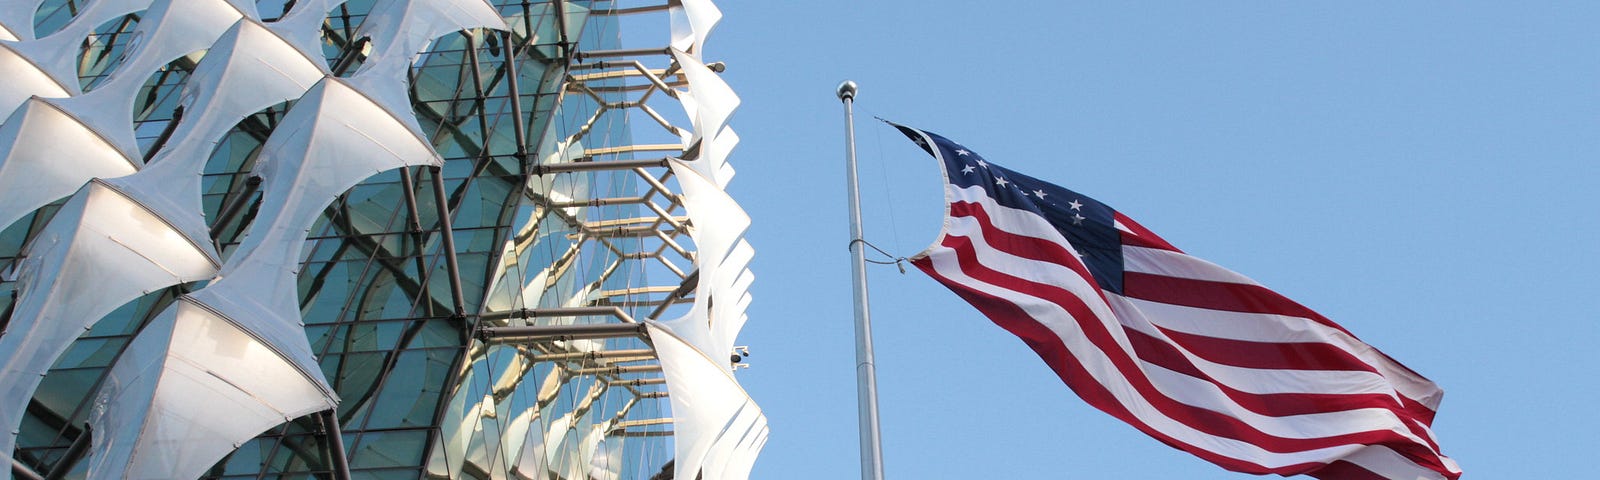 American flag flies outside U.S. Embassy in London